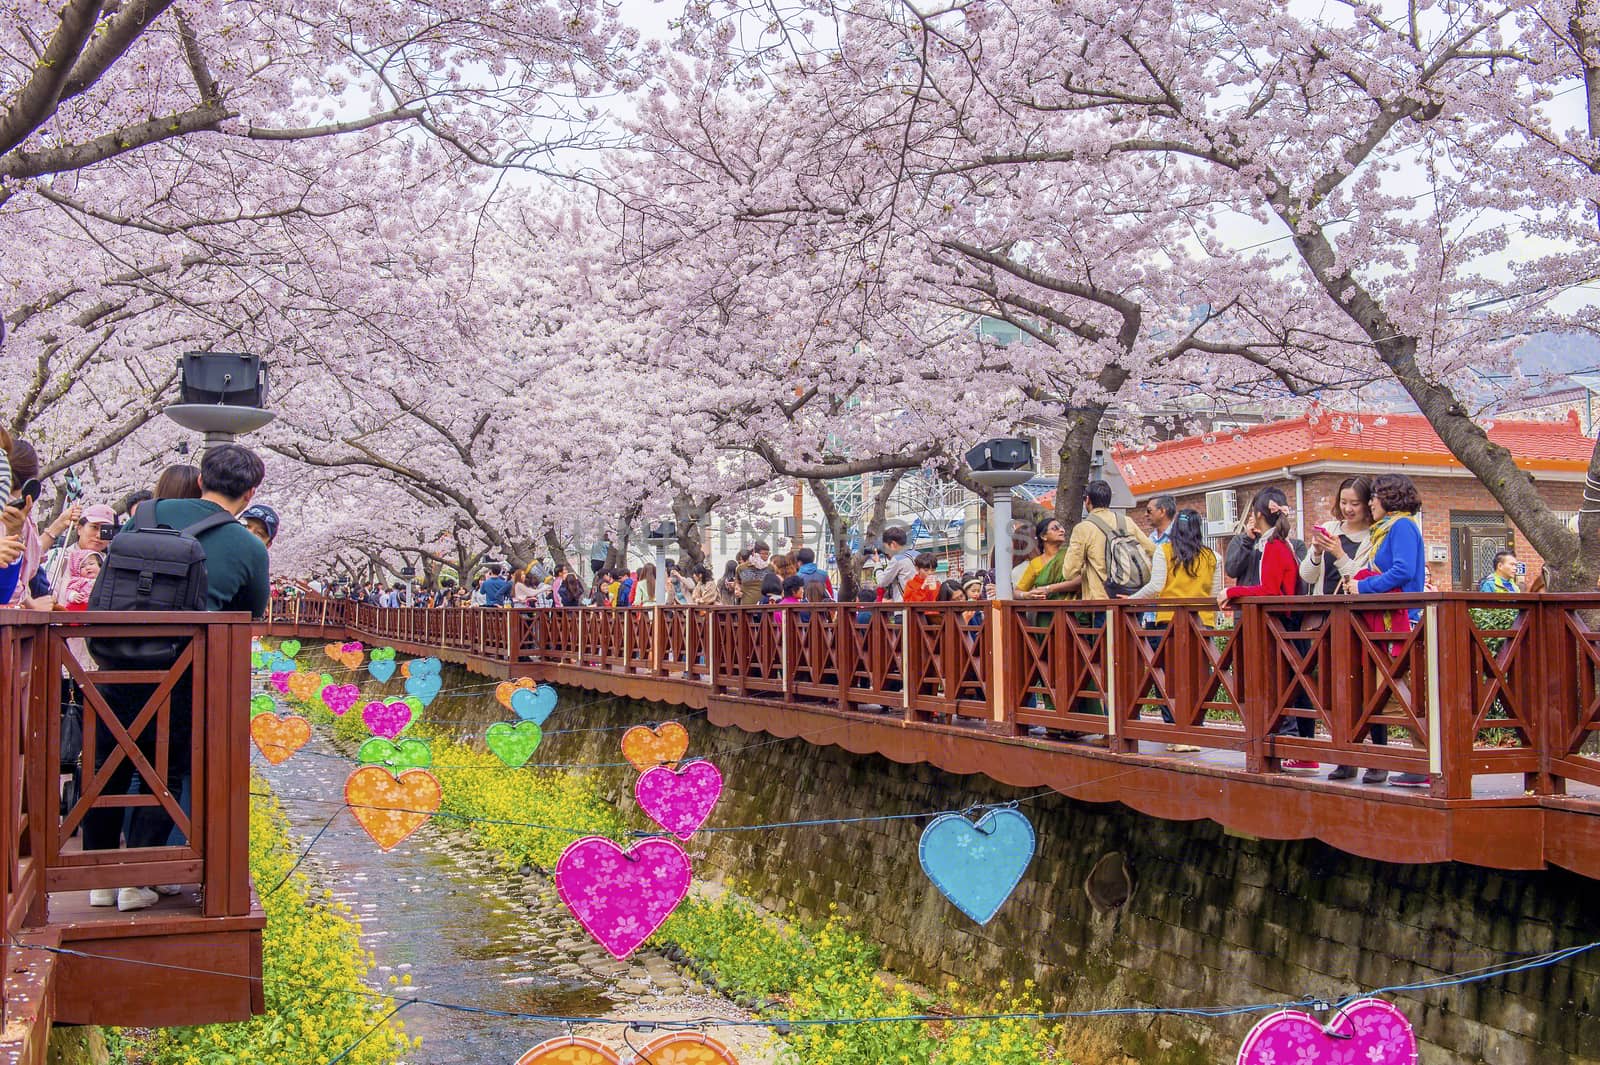 JINHAE,KOREA - APRIL 4 : Jinhae Gunhangje Festival is the largest cherry blossom festival in Korea.Tourists taking photos of the beautiful scenery around Jinhae,Korea on April 4,2015.